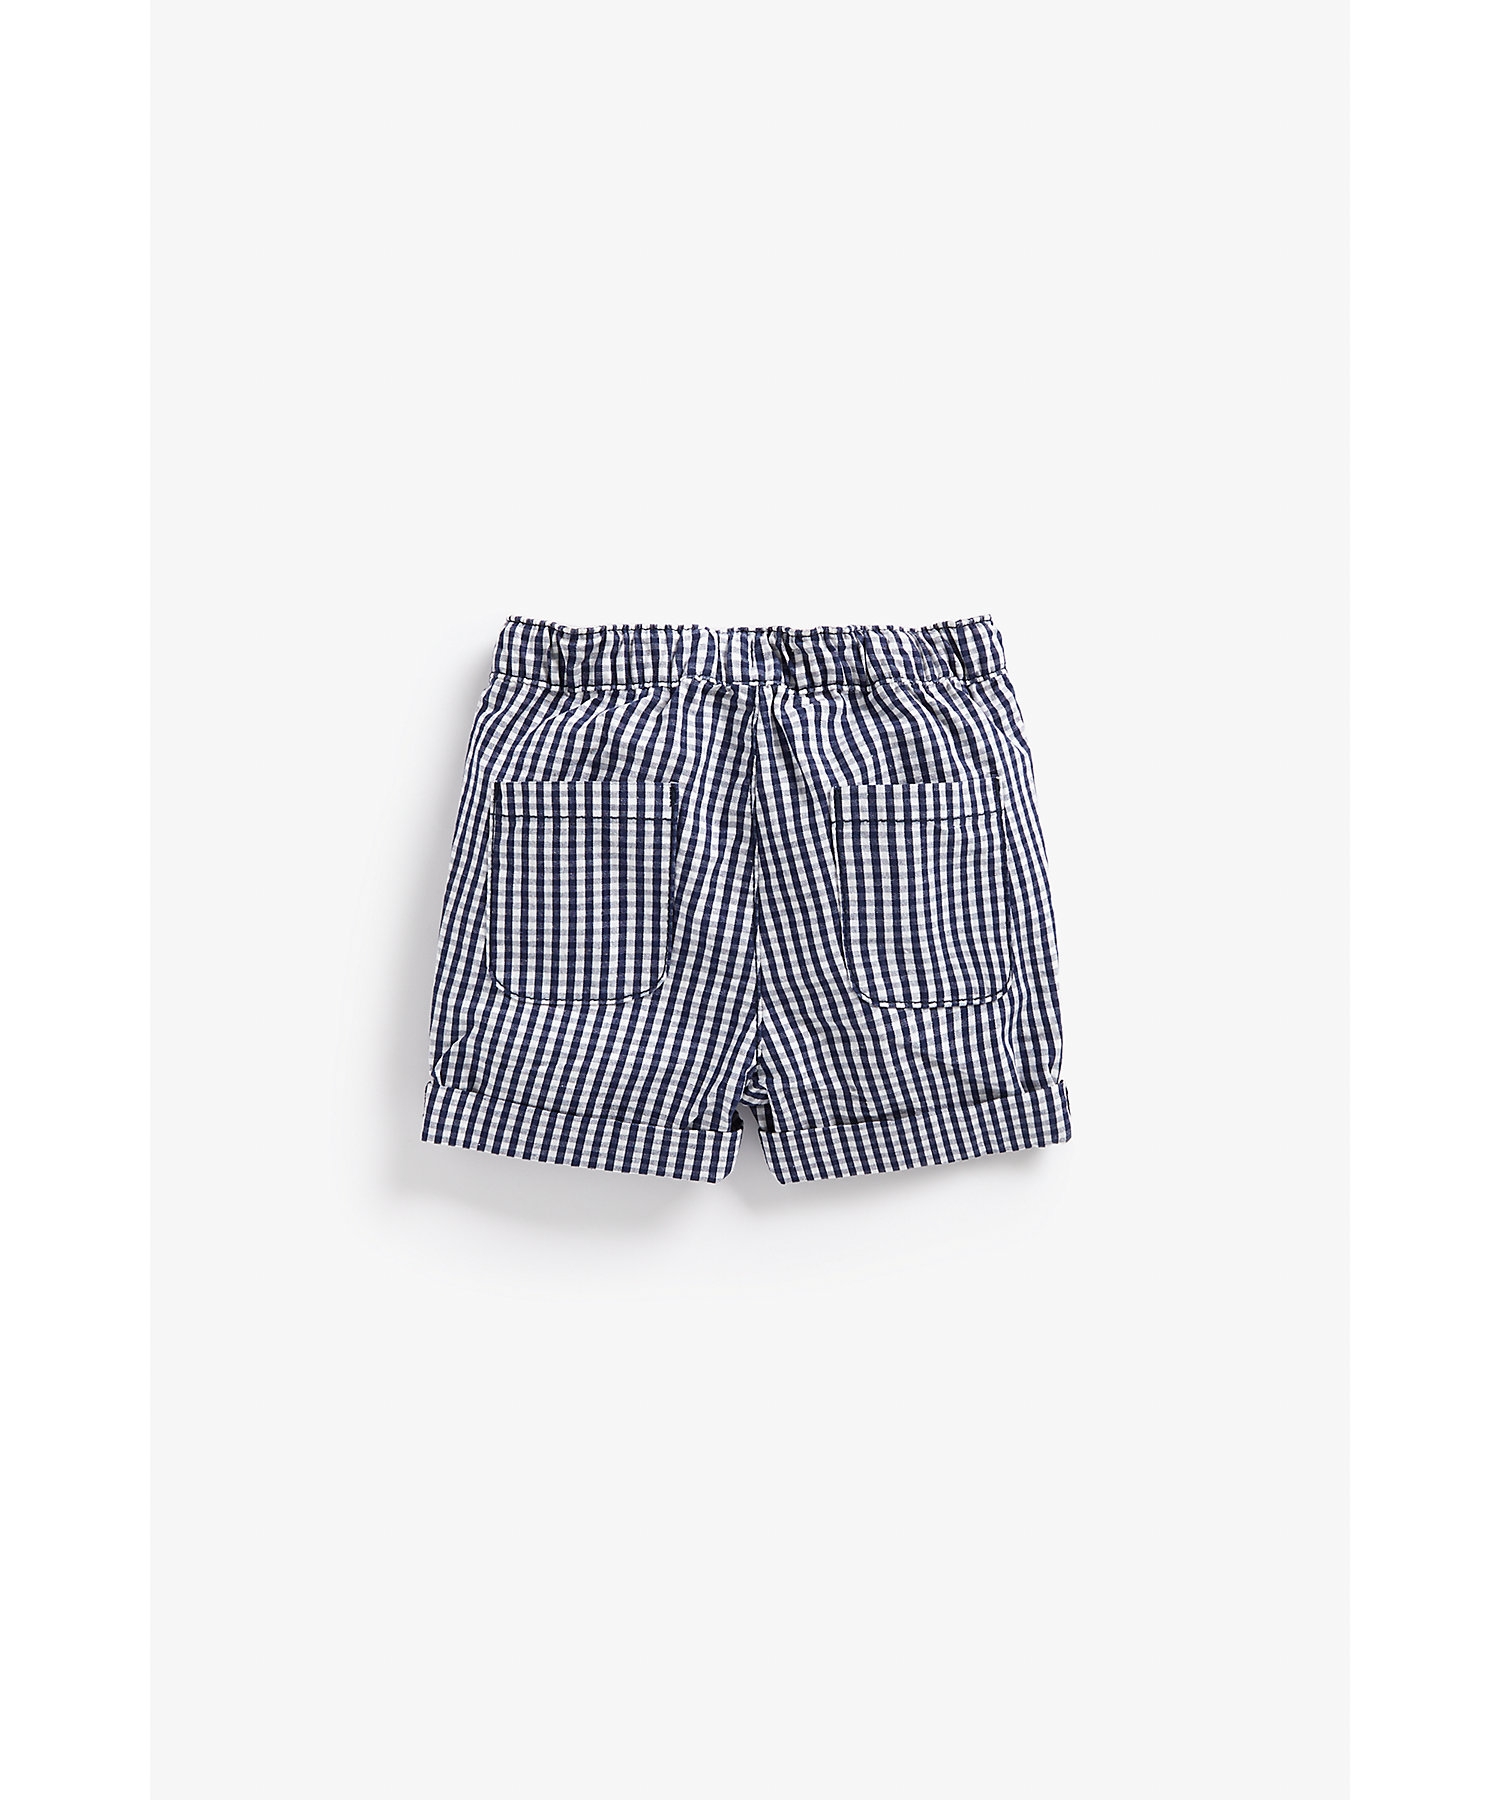 Boys Shorts Checked-Navy